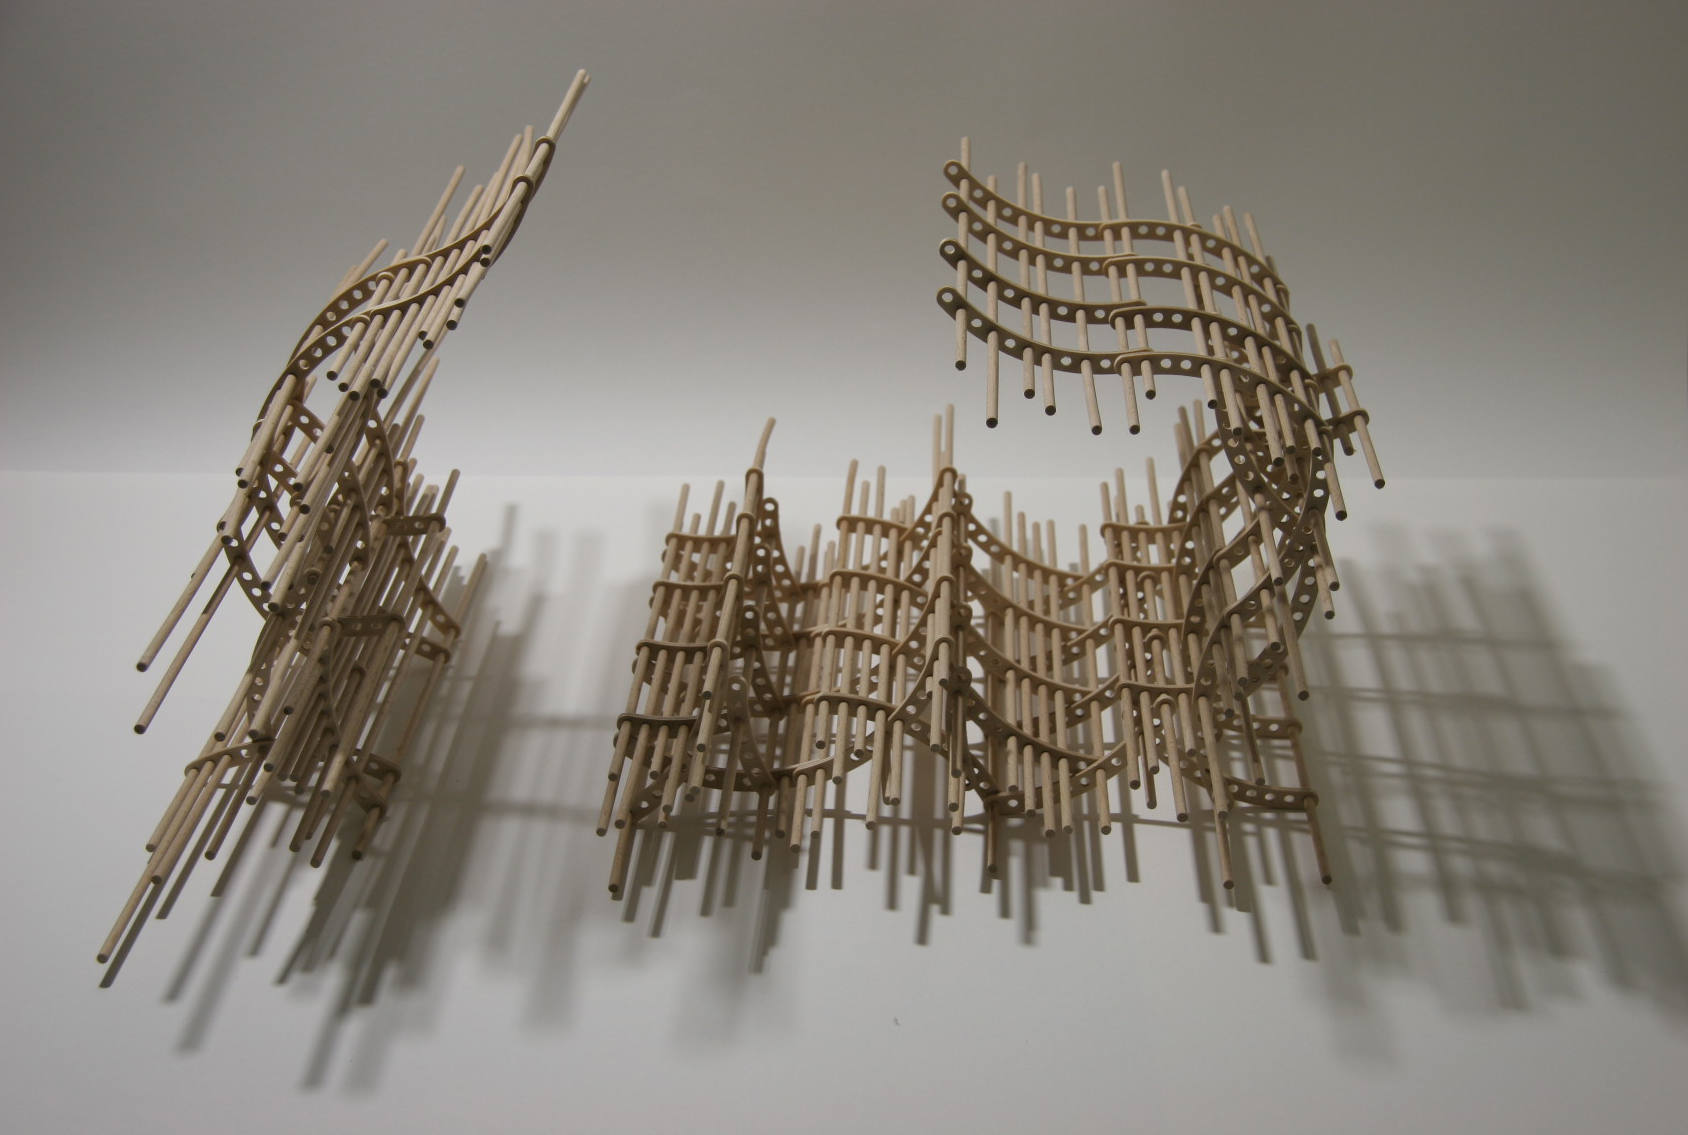 Solaris, 2009; plywood, wooden sticks, 56 x 58 x 30 cm